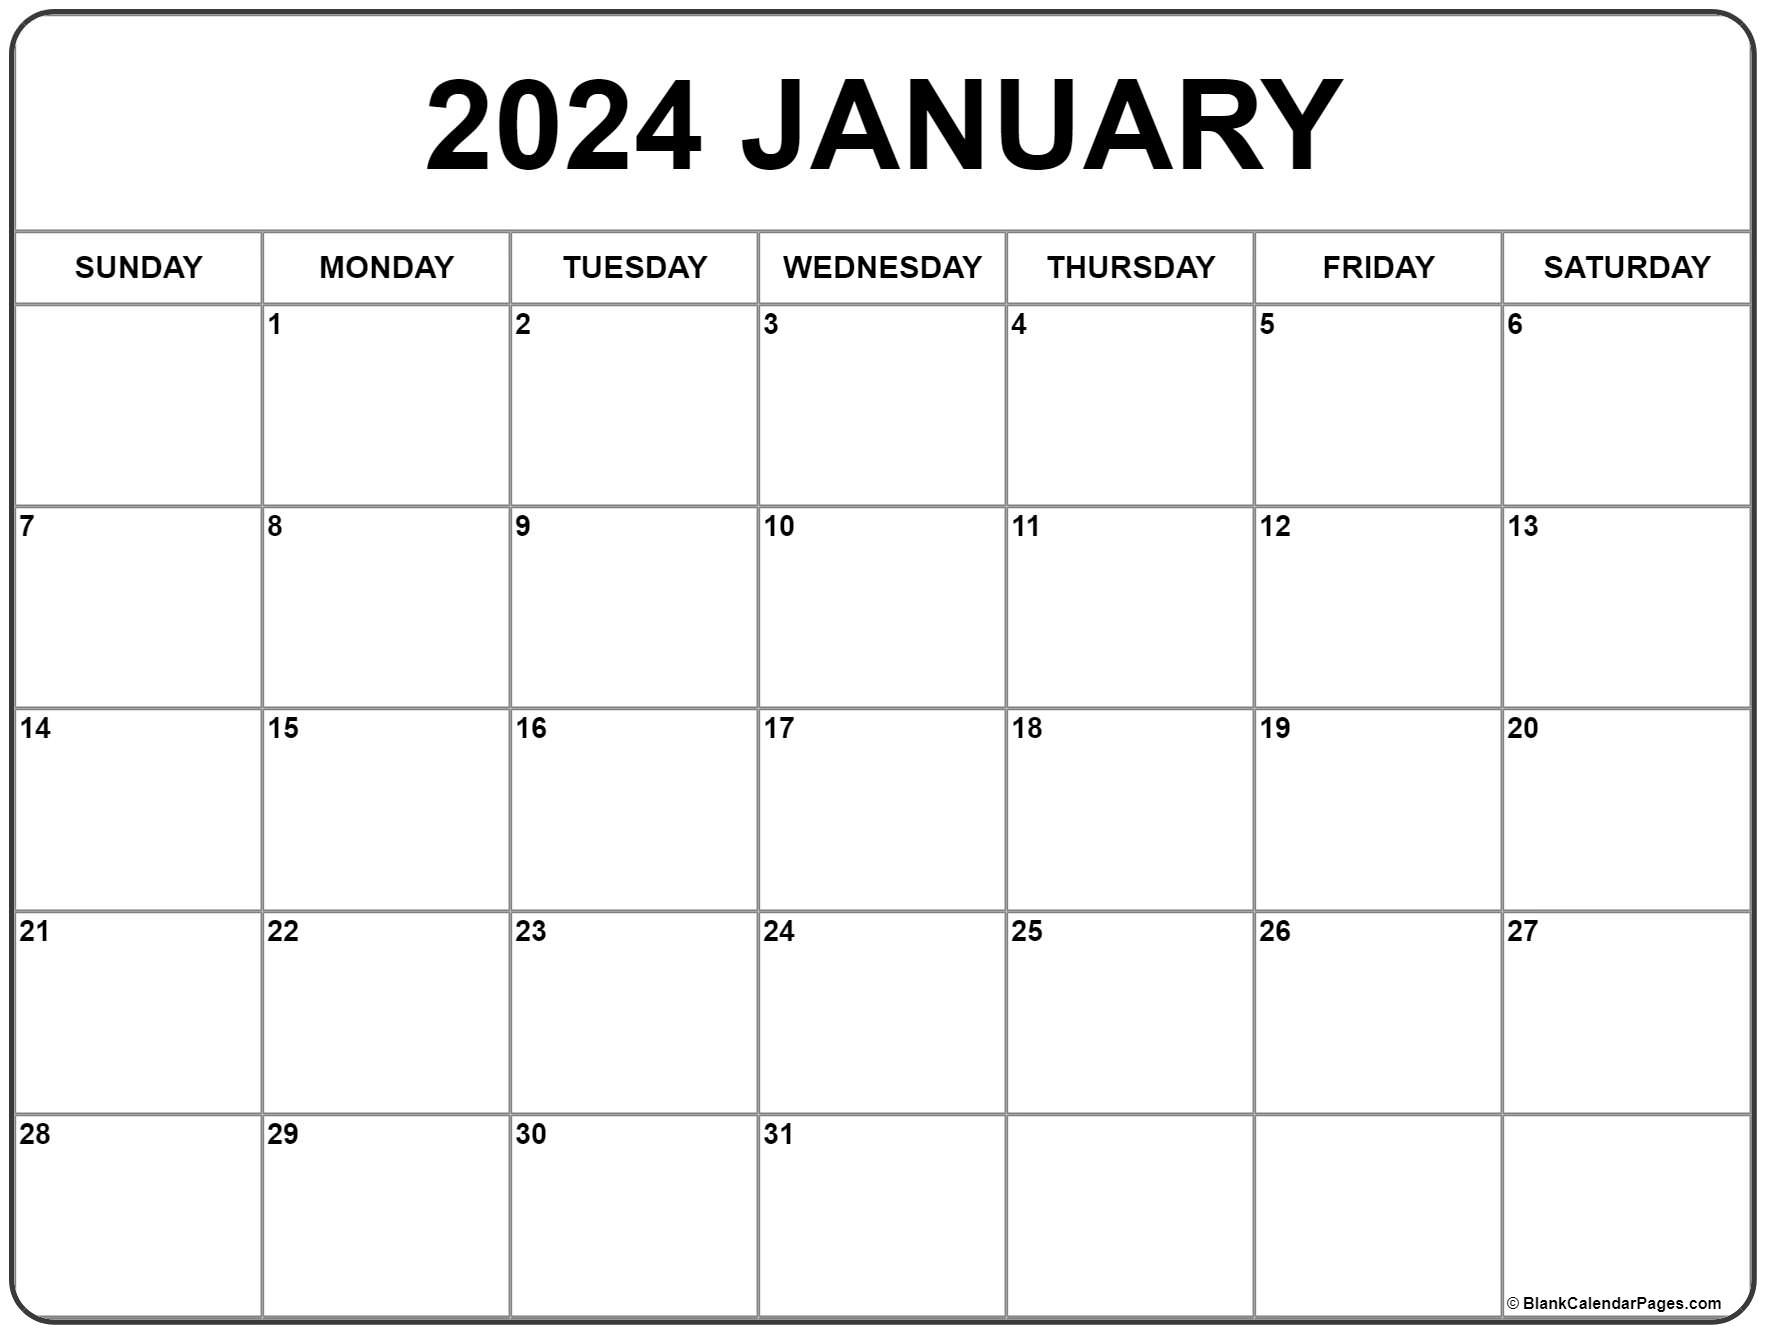 January 2024 Calendar | Free Printable Calendar for Free Printable January 2024 Calendar